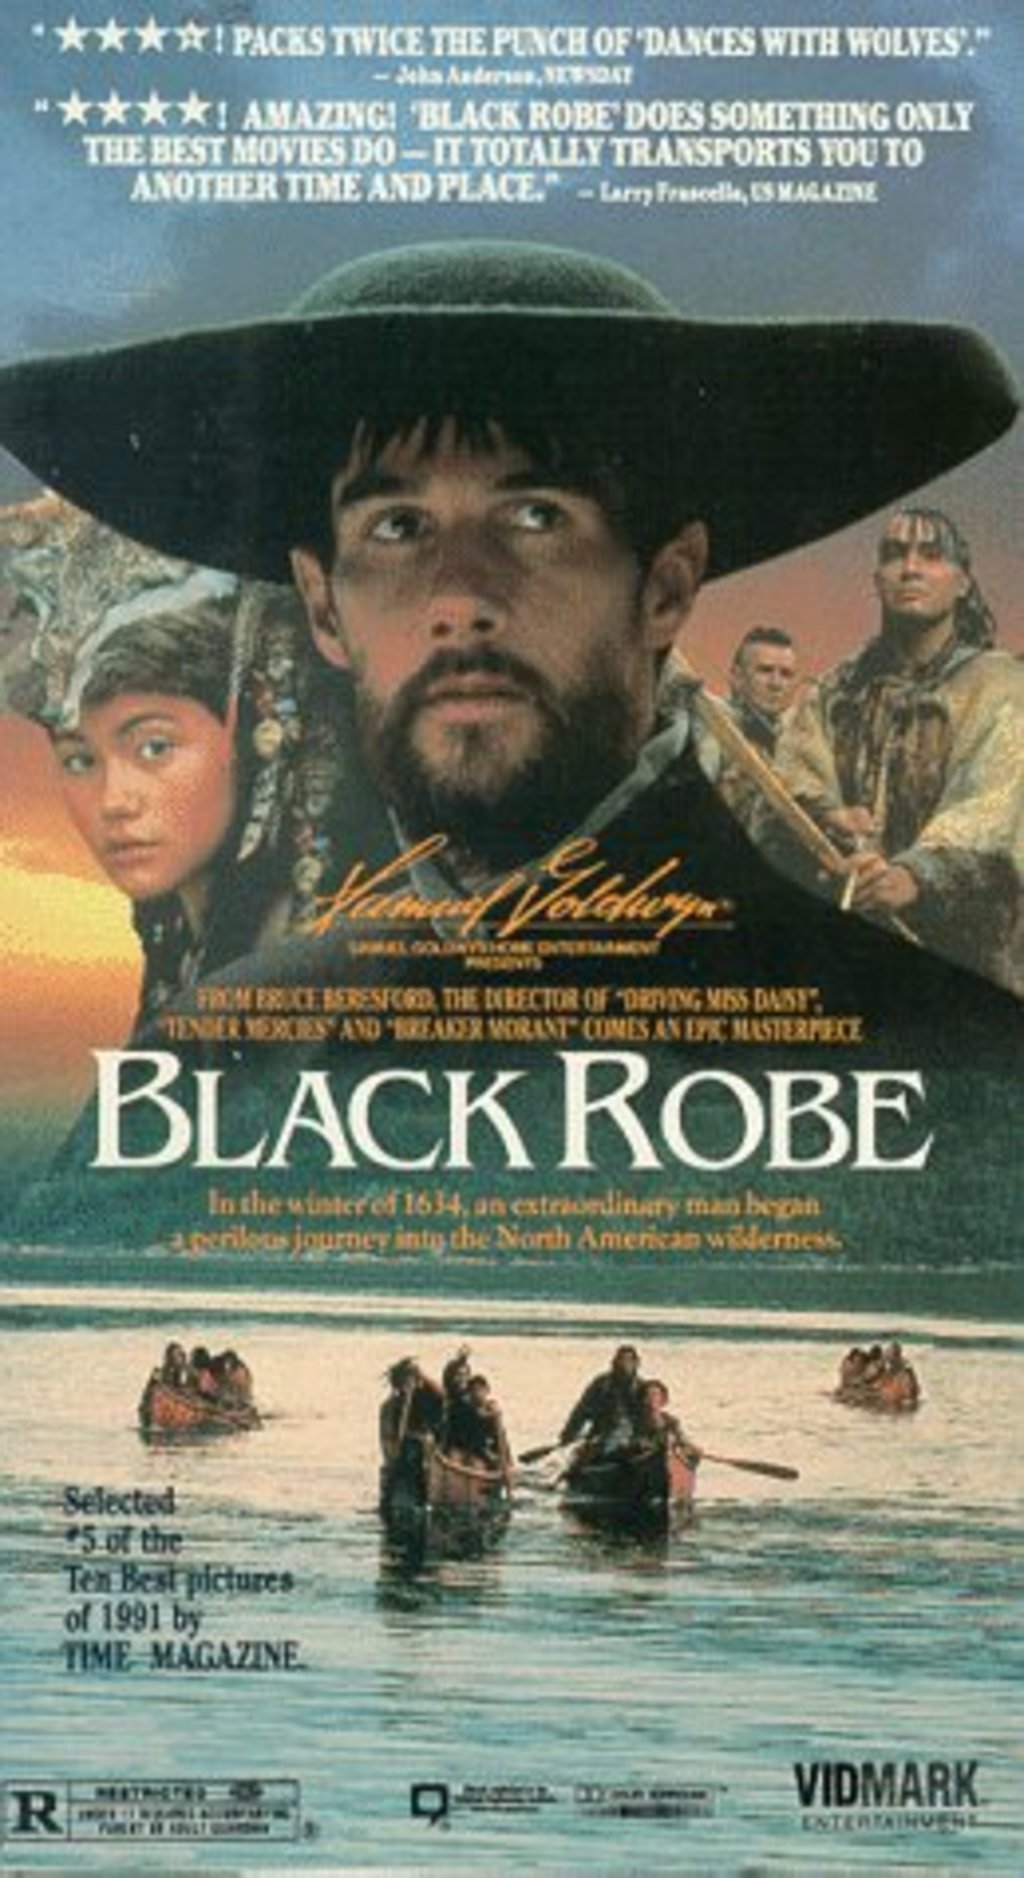 Watch Black Robe on Netflix Today! | NetflixMovies.com